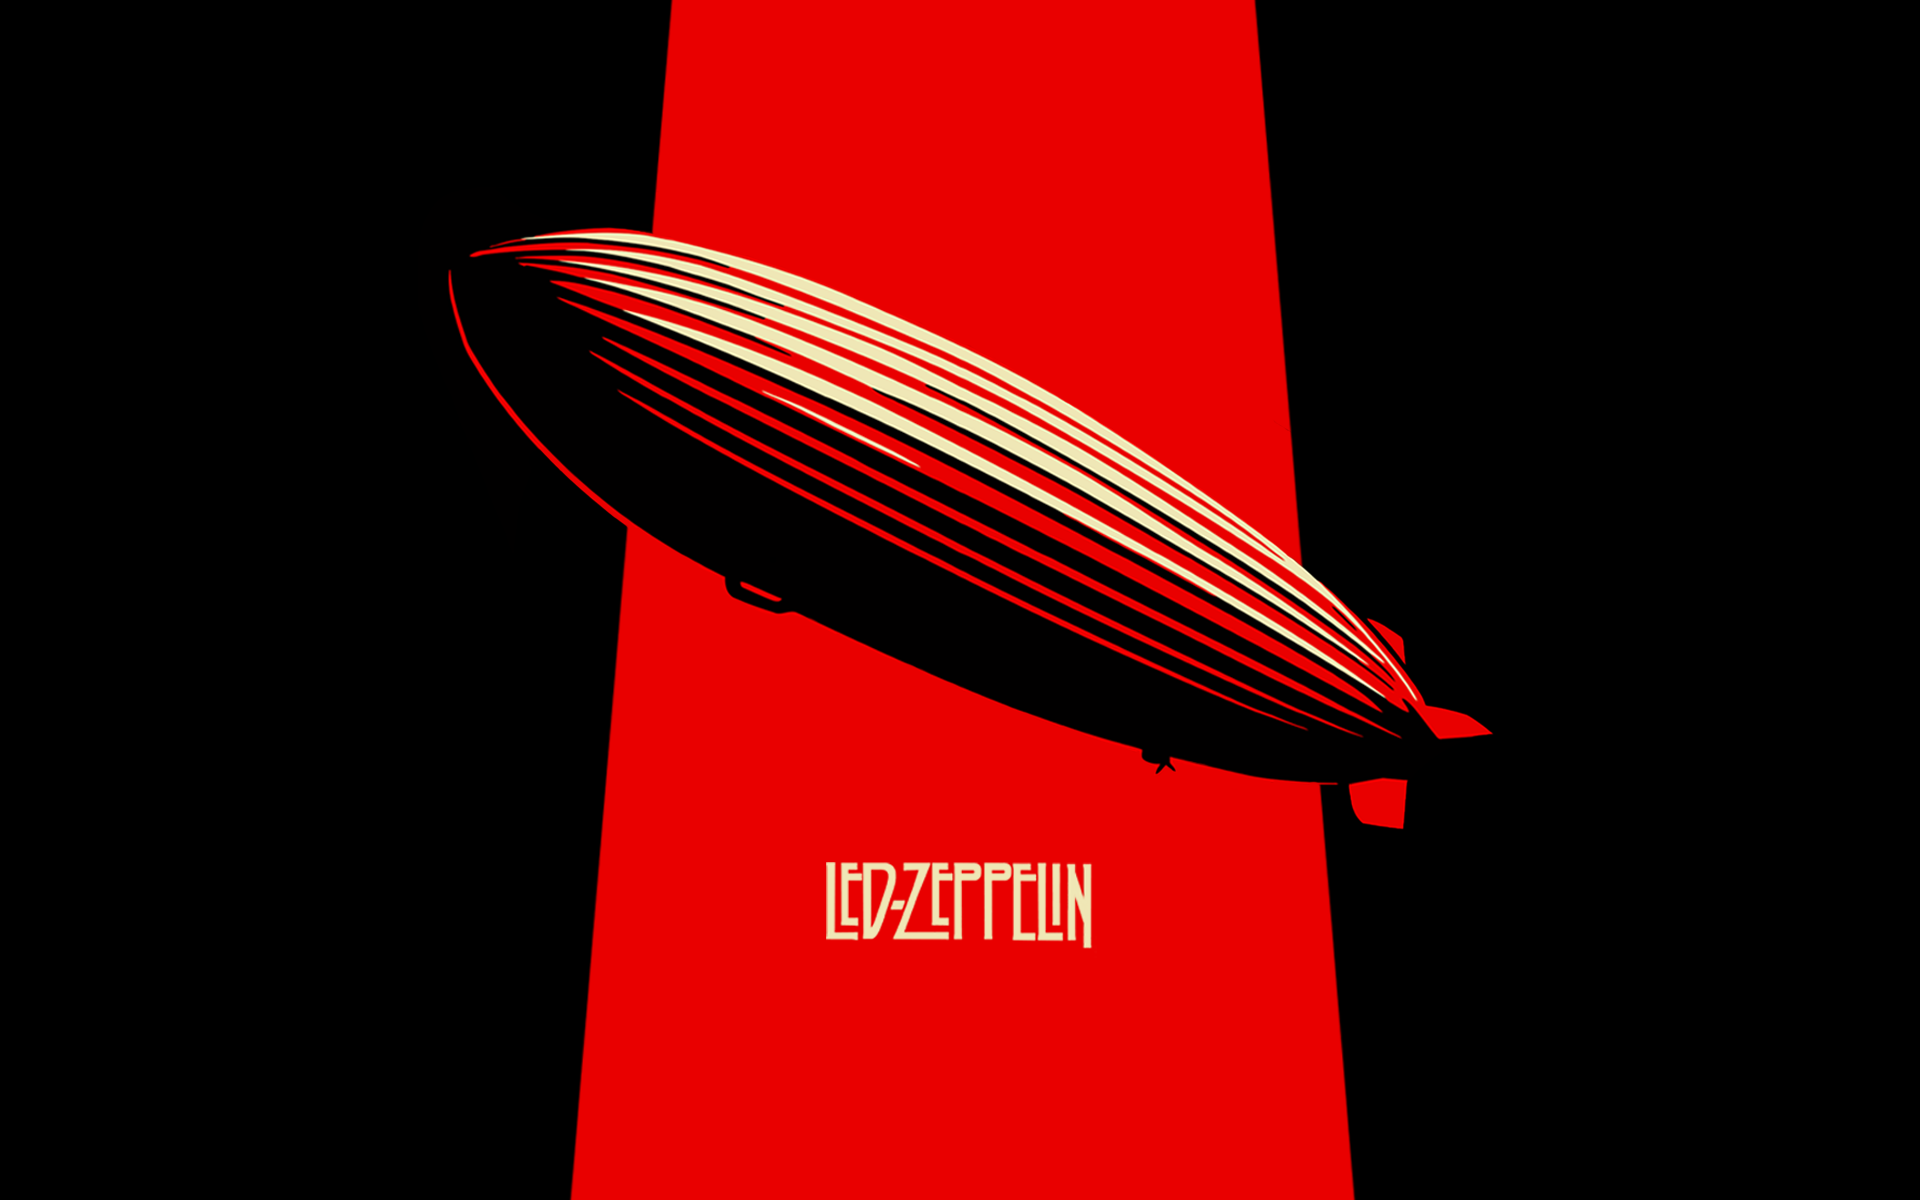 Led Zeppelin Backgrounds - Wallpaper Cave